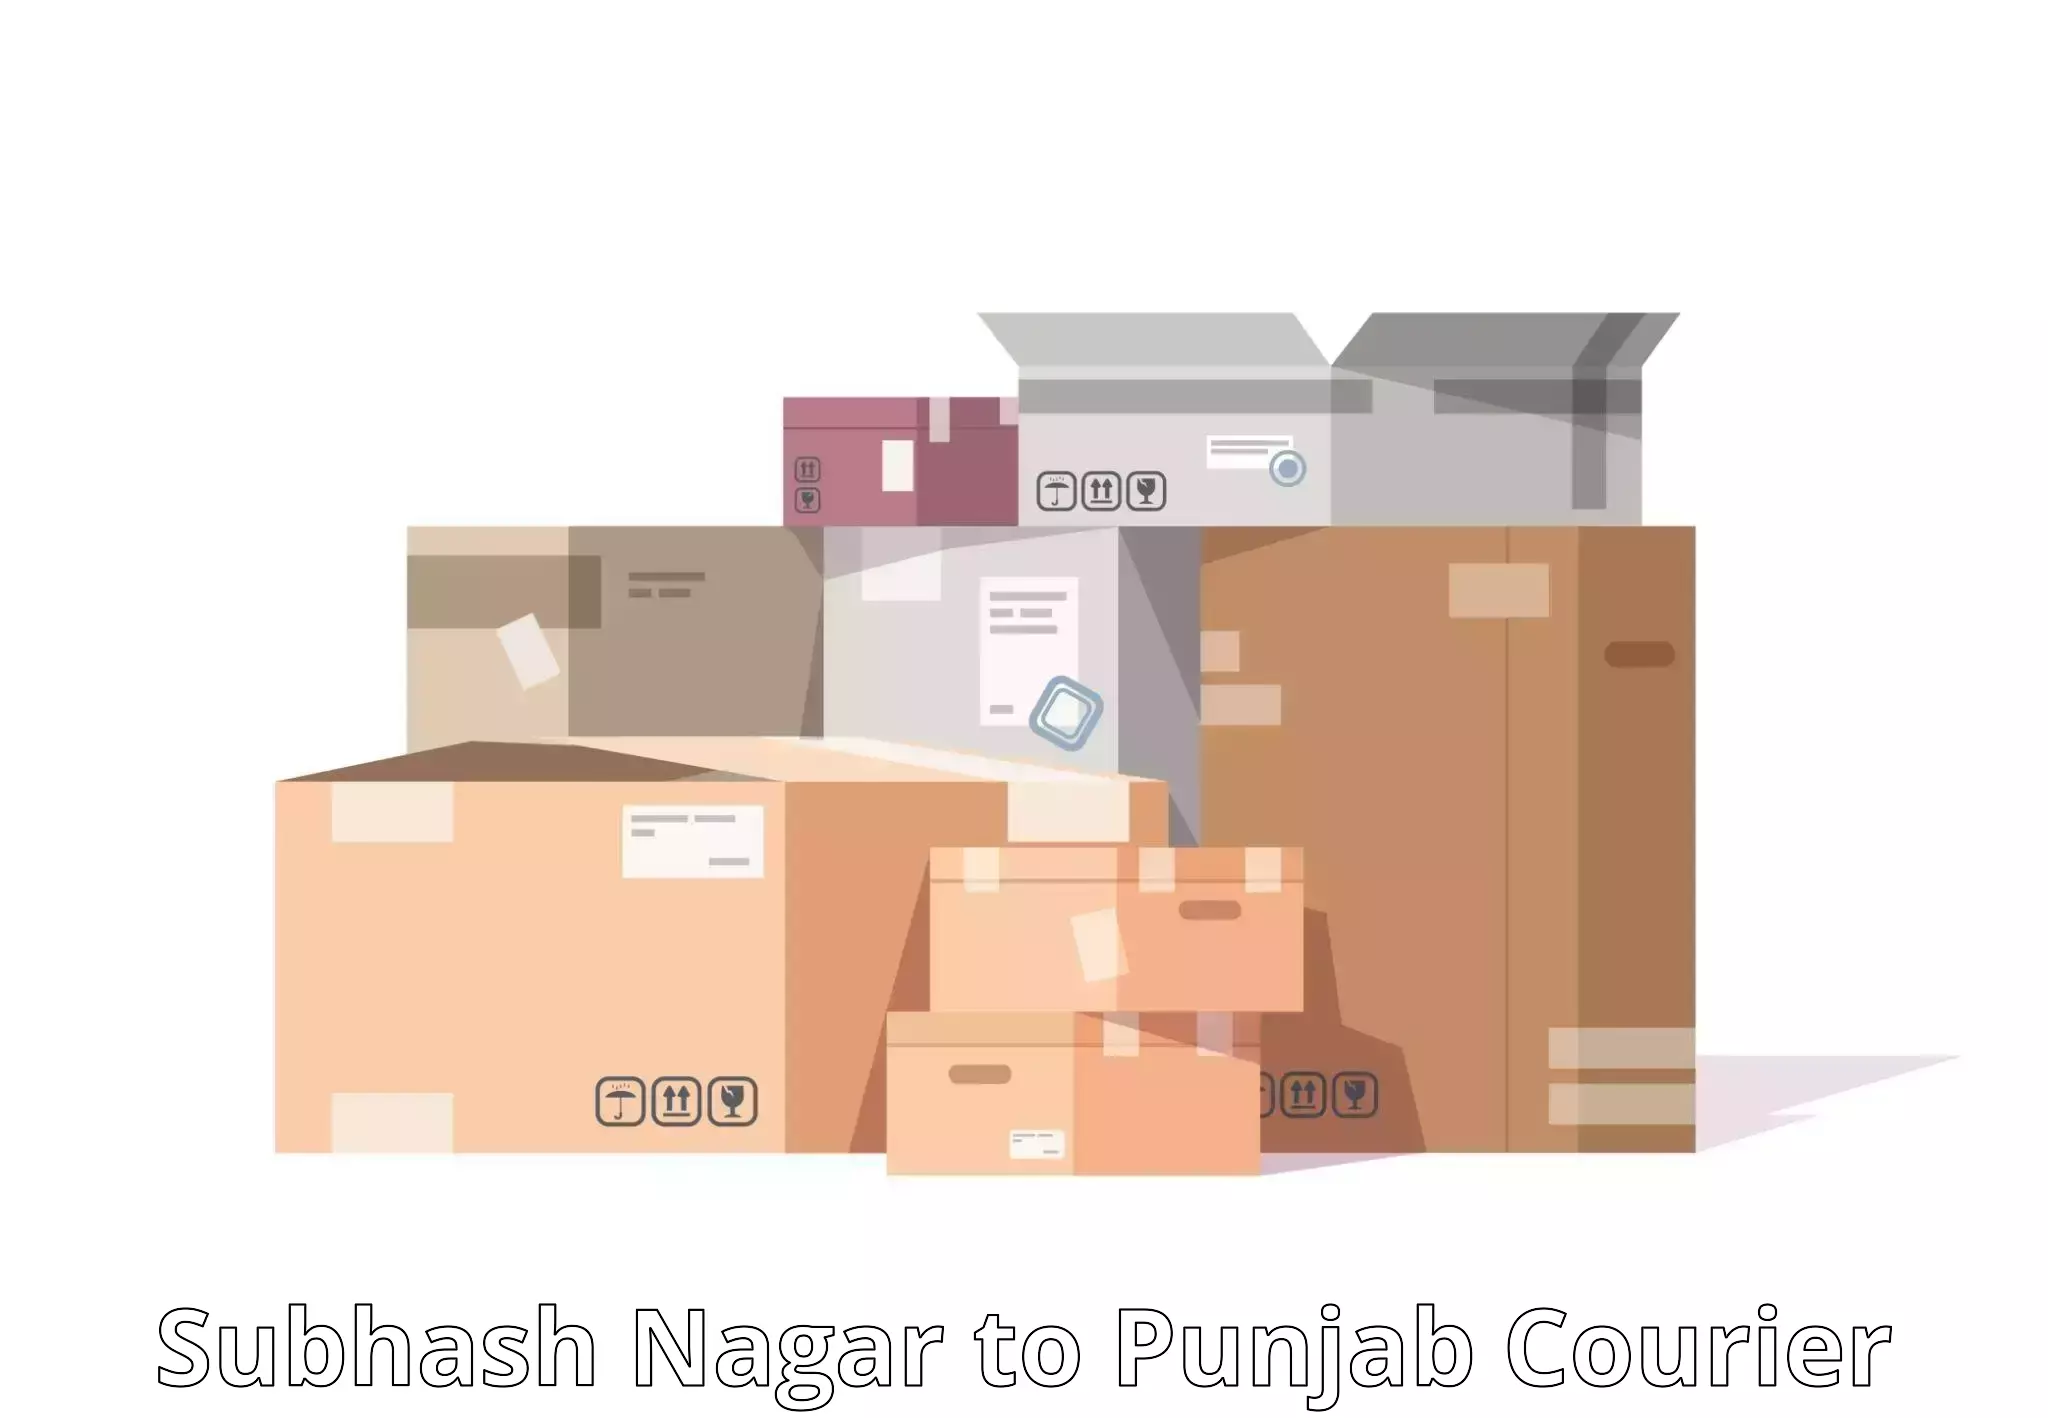 Nationwide delivery network Subhash Nagar to Punjab